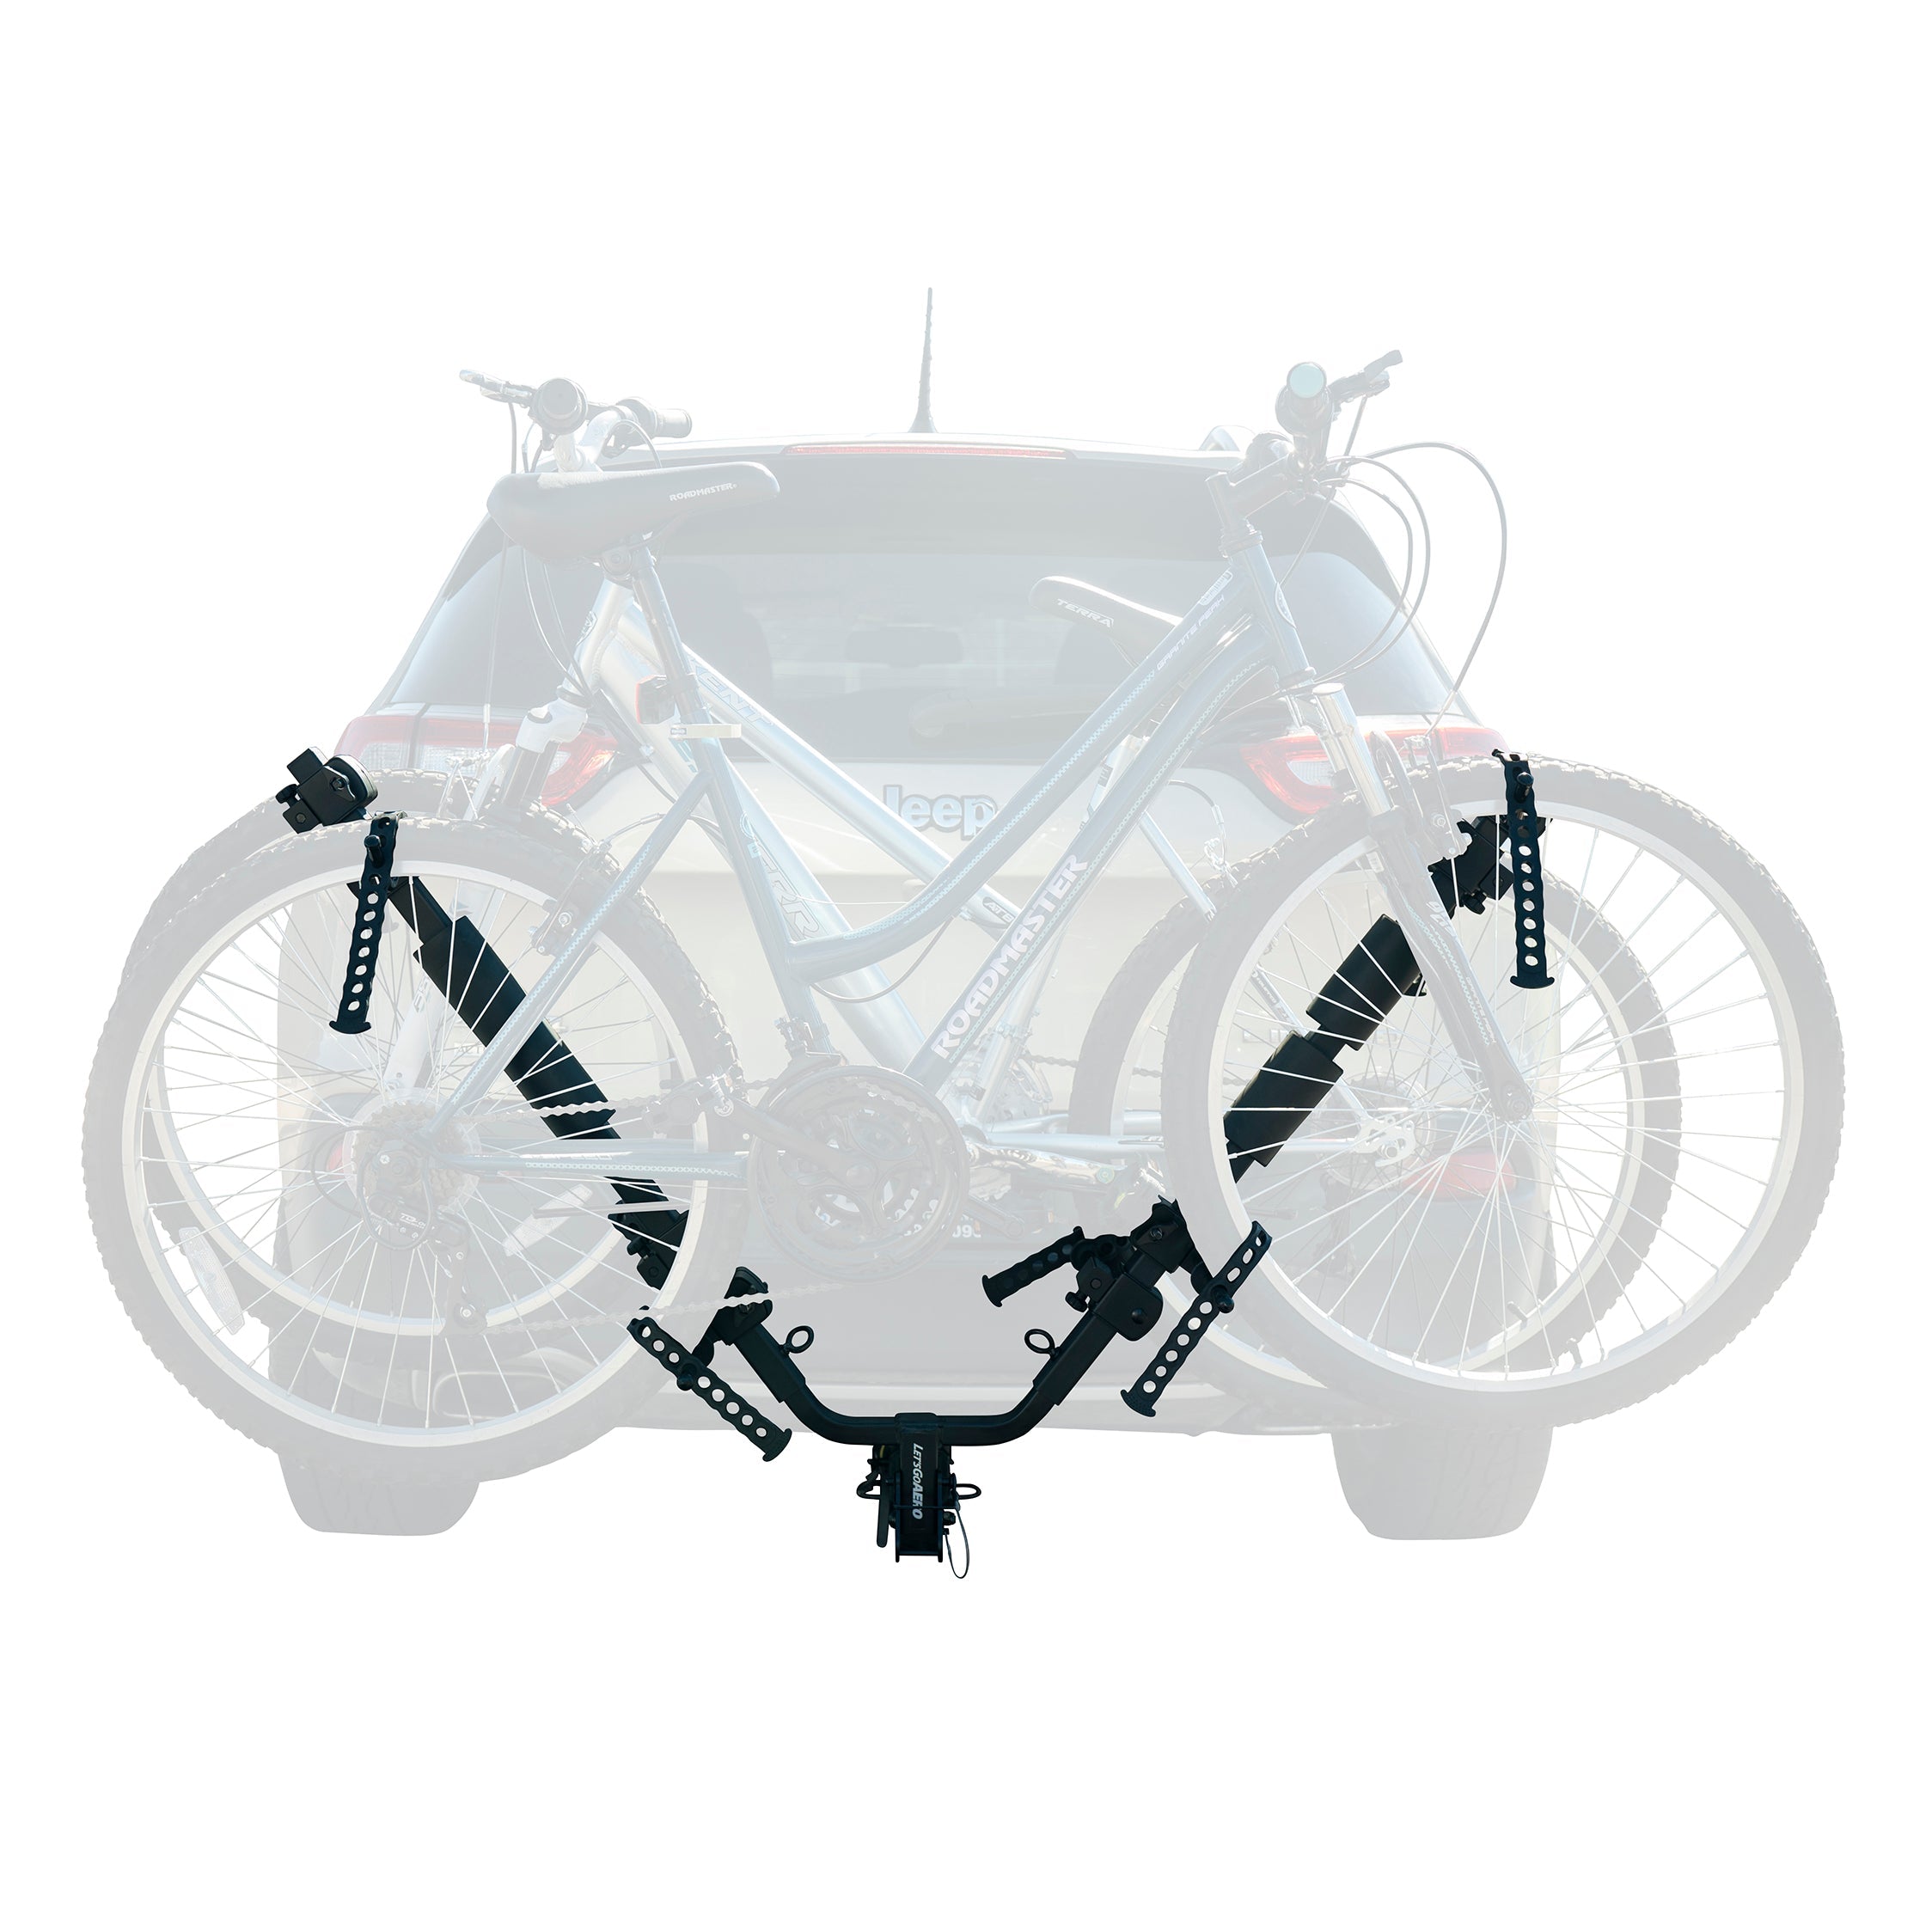 BikeWing-2 PRO Tilting Two Bike Rack *SHIP-N-SCRATCH - 50% OFF*